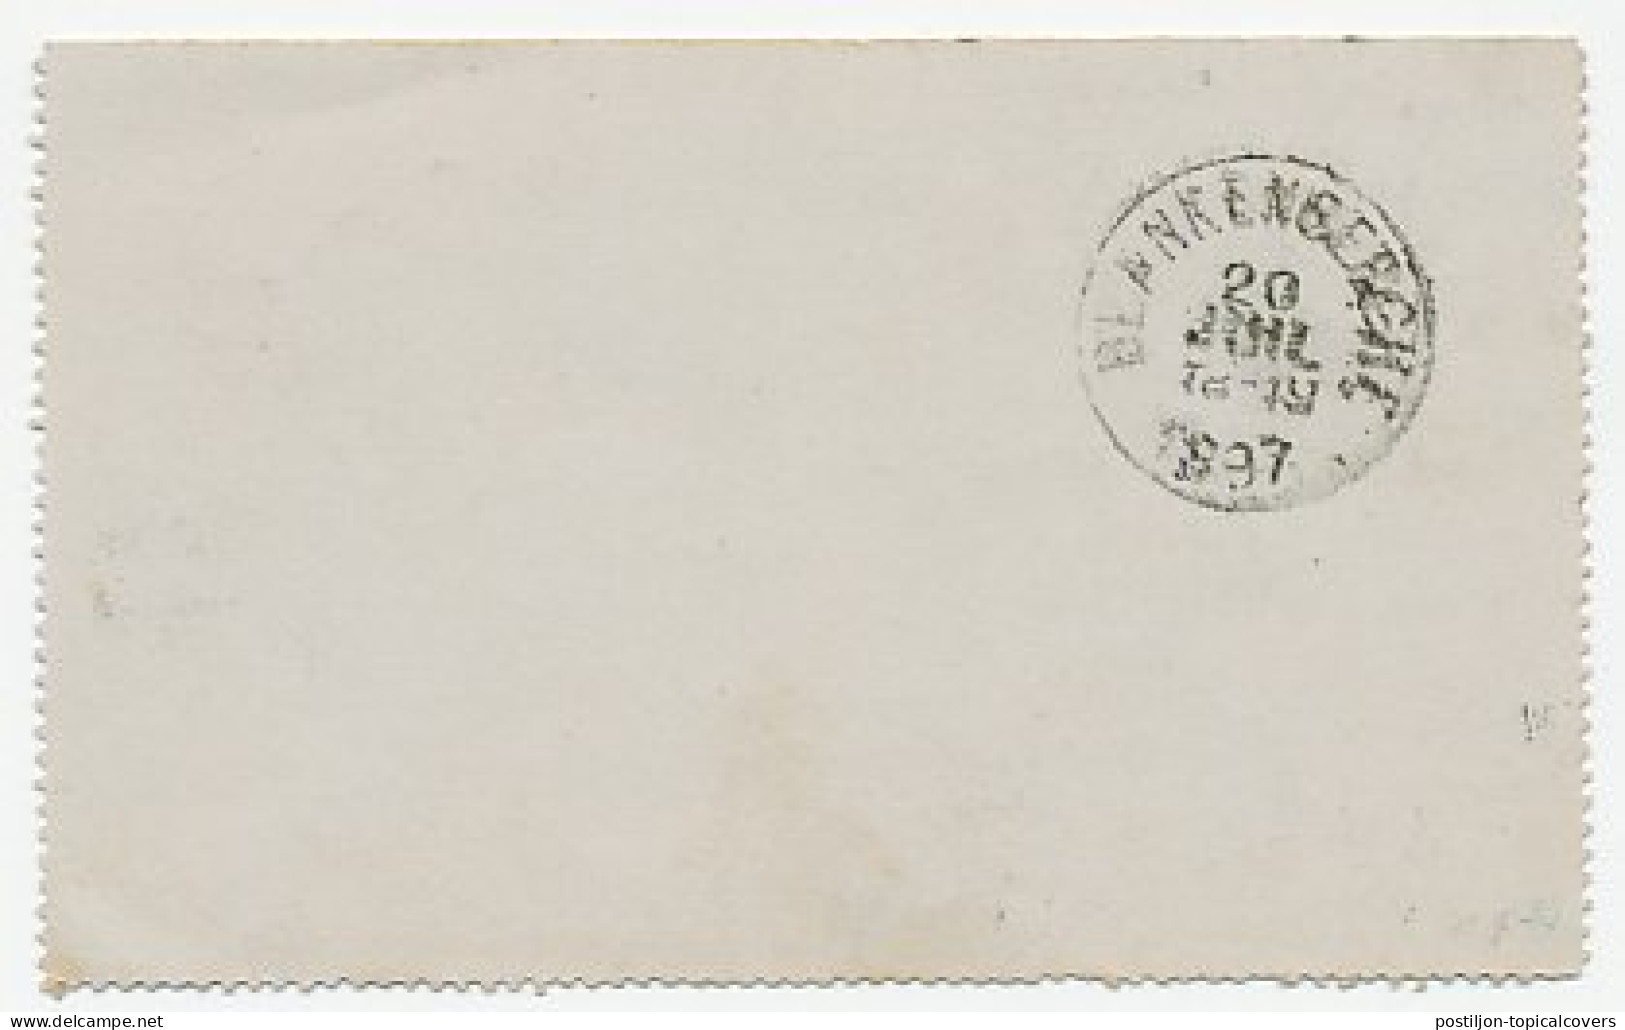 Postblad G. 6 / Bijfrankering Maastricht - Belgie 1897 - Postal Stationery